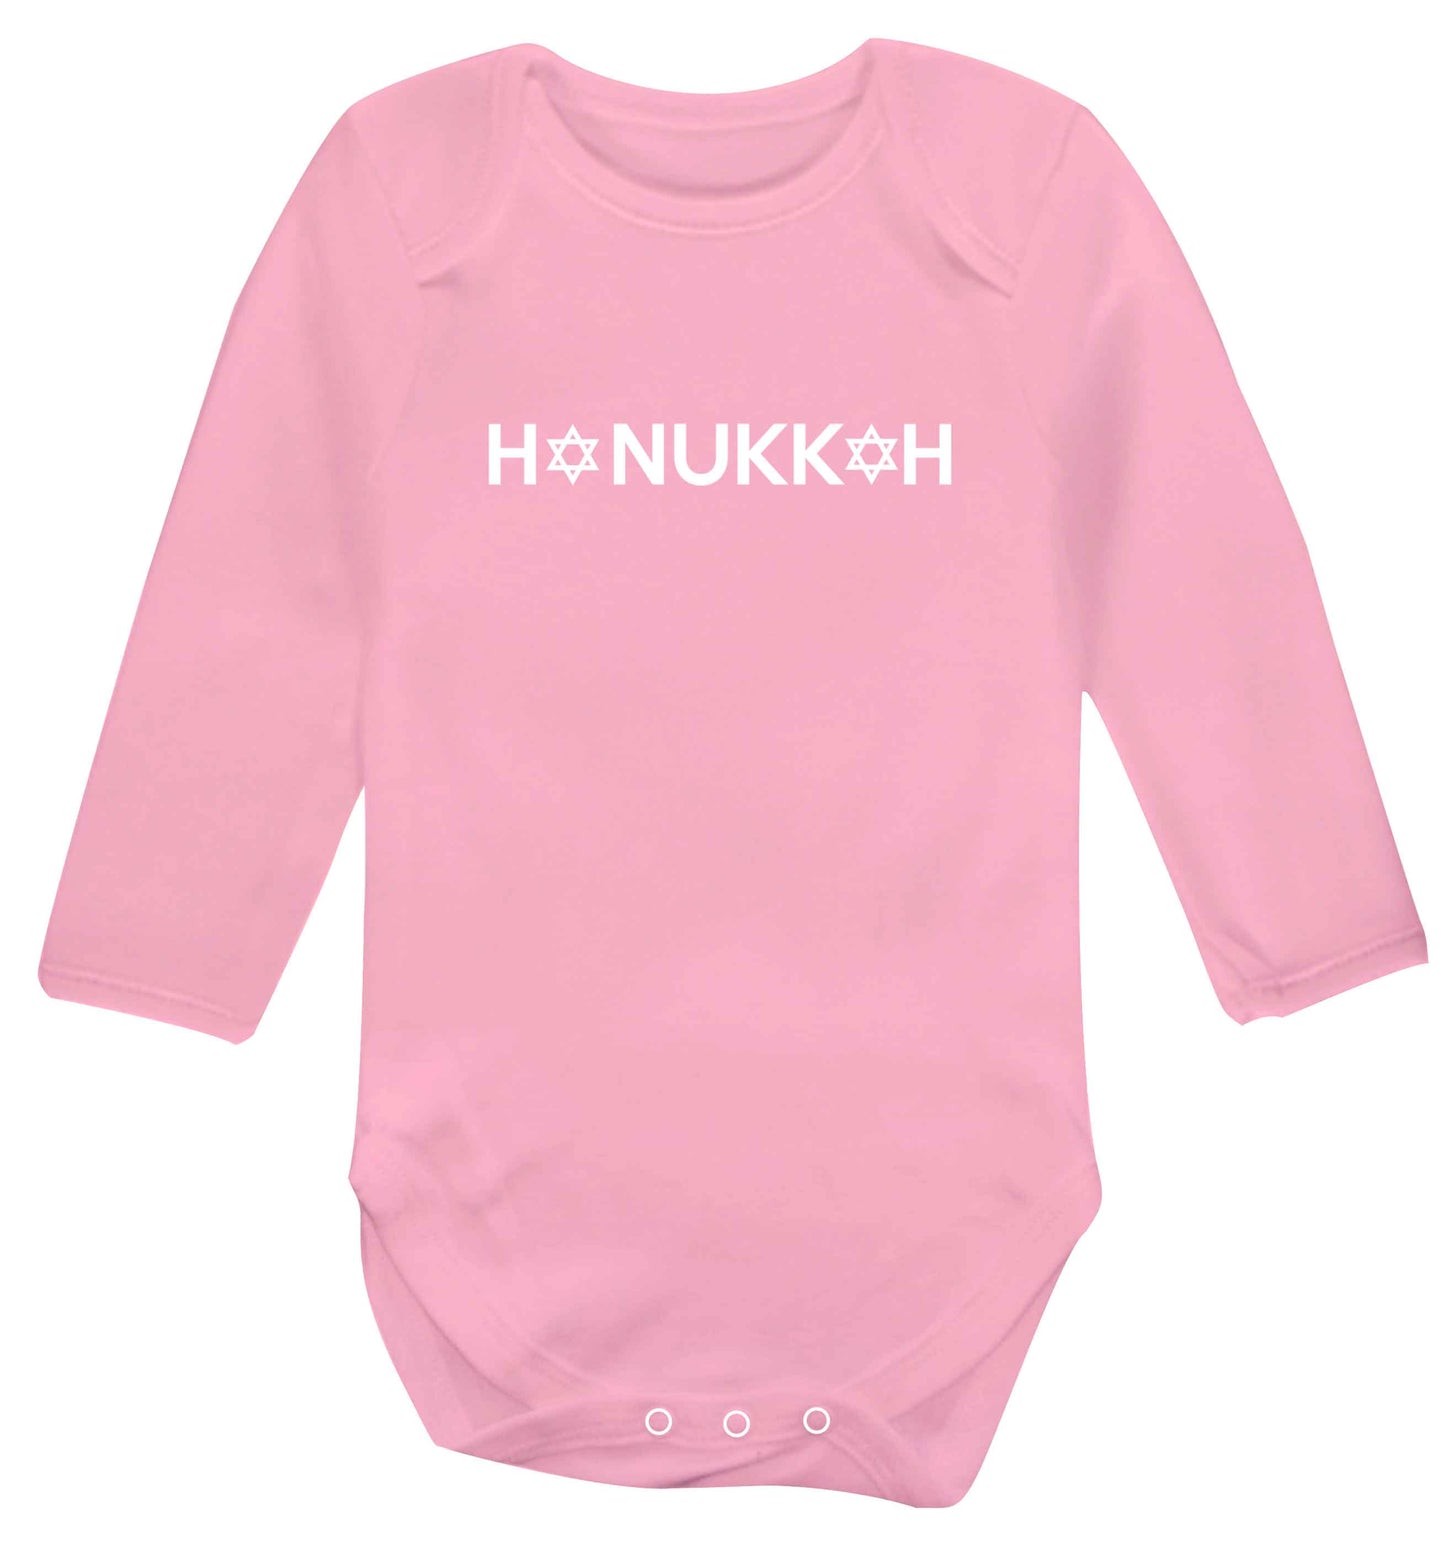 Hanukkah star of david baby vest long sleeved pale pink 6-12 months